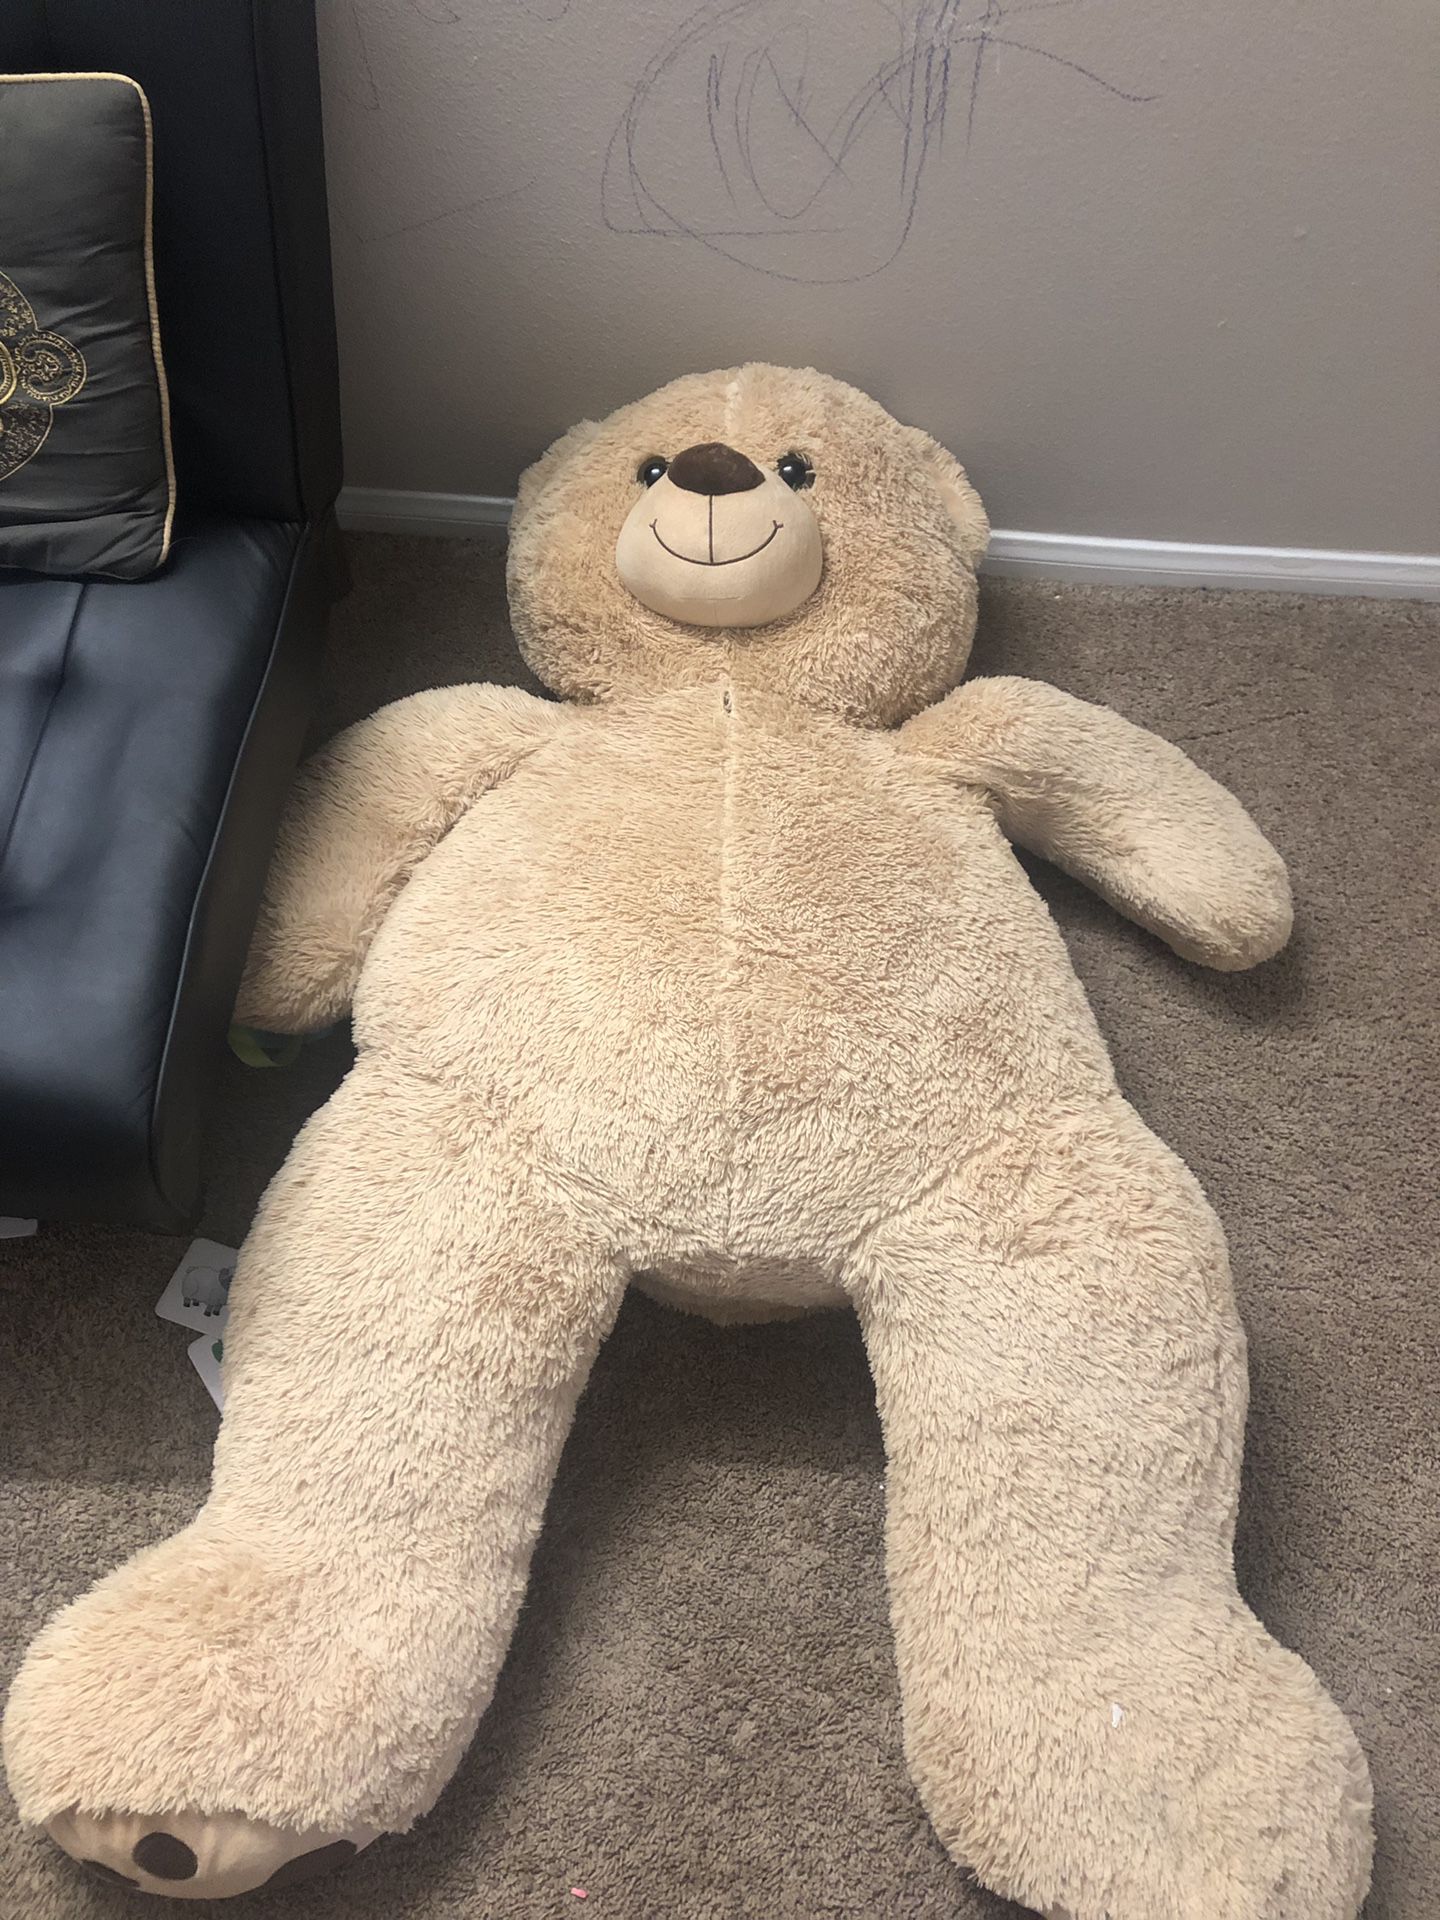 Big teddy bear